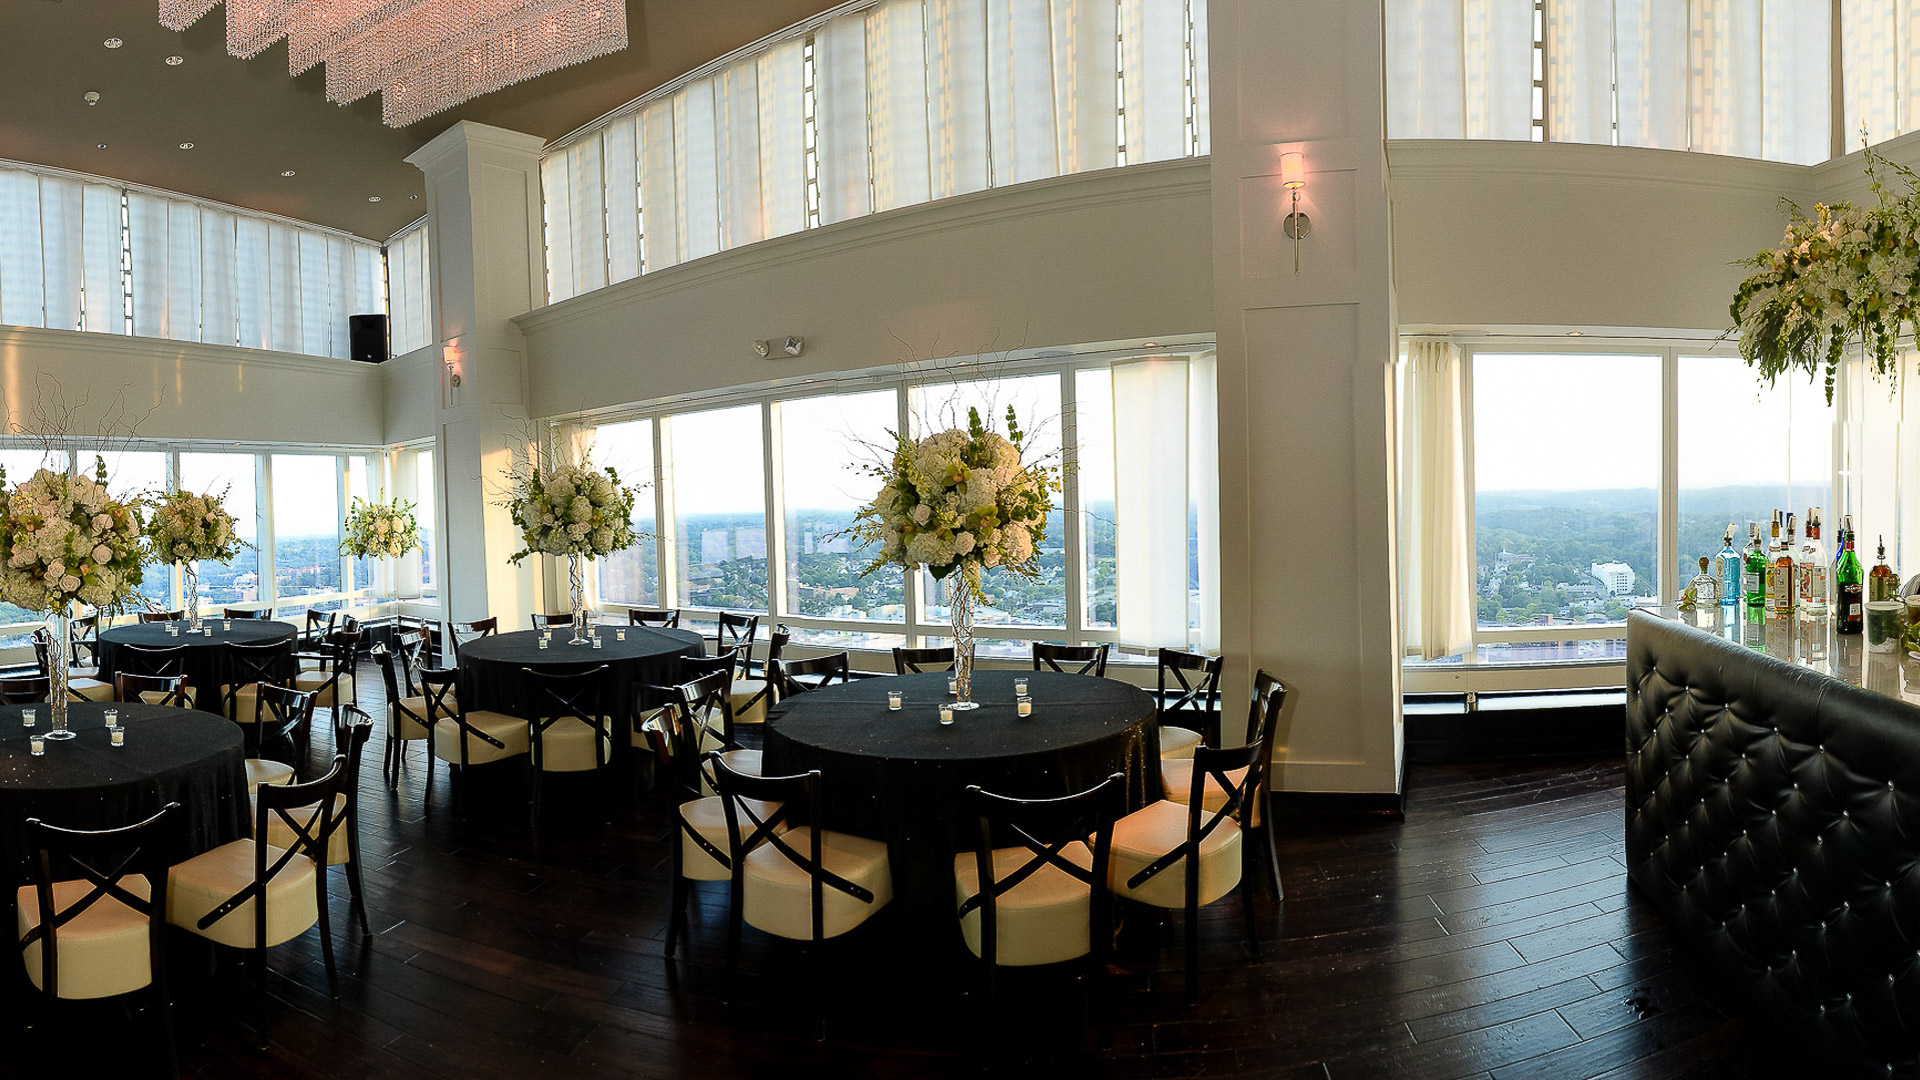 Ritz Carlton White Plains 42 restaurant wedding dinner setup wth Hudson Valley views